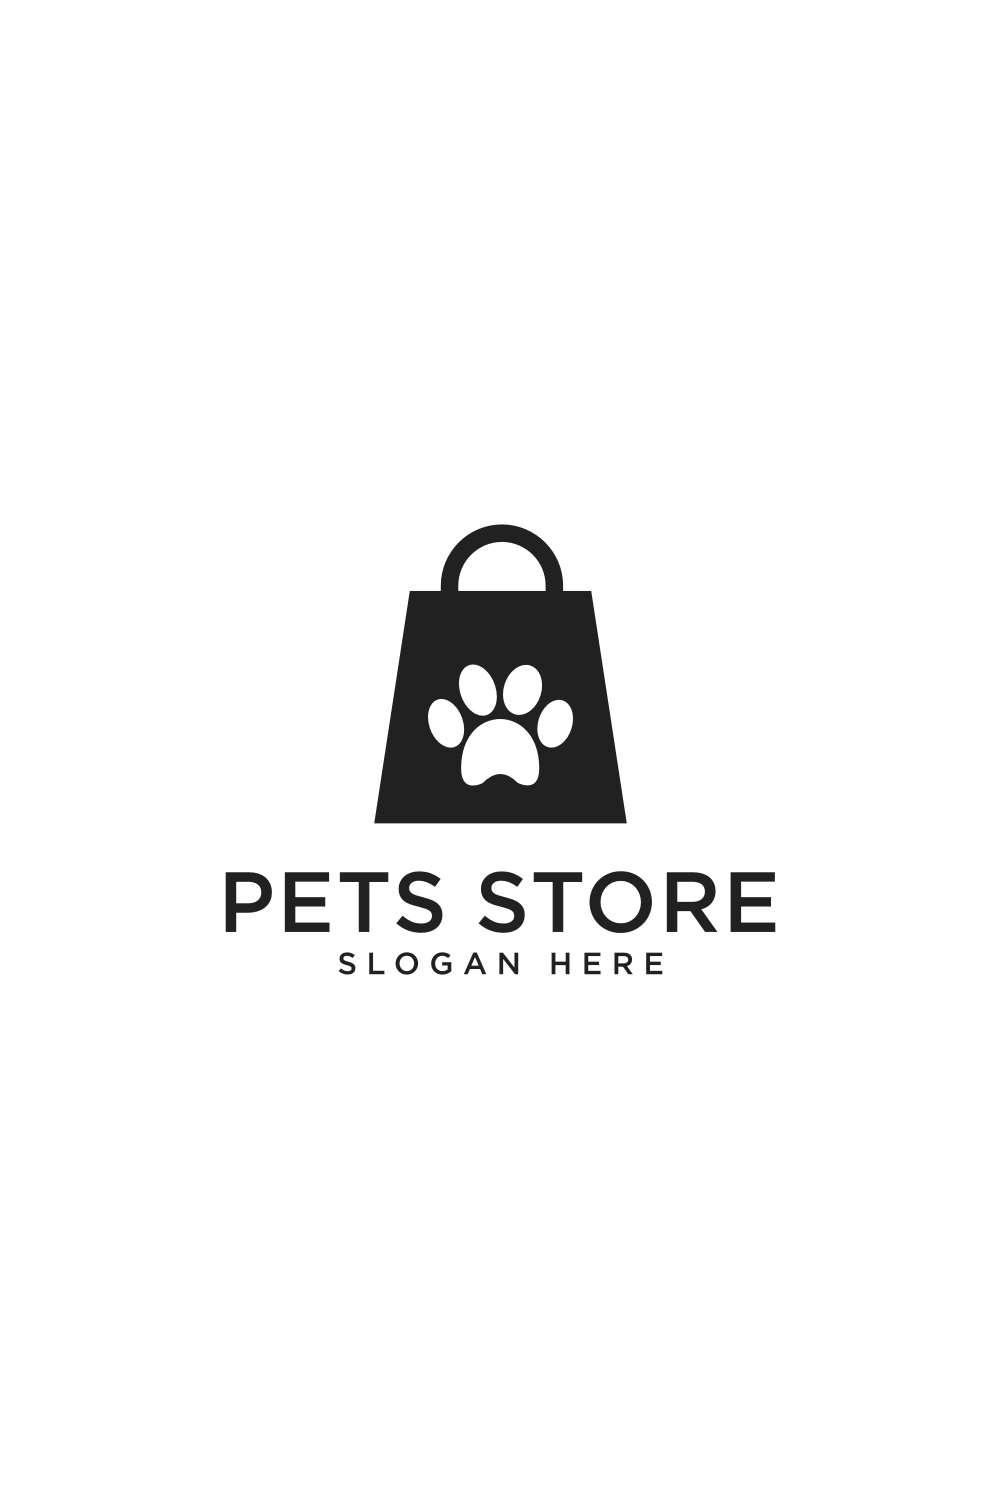 Pets Store Logo Vector Design Pinterest preview.